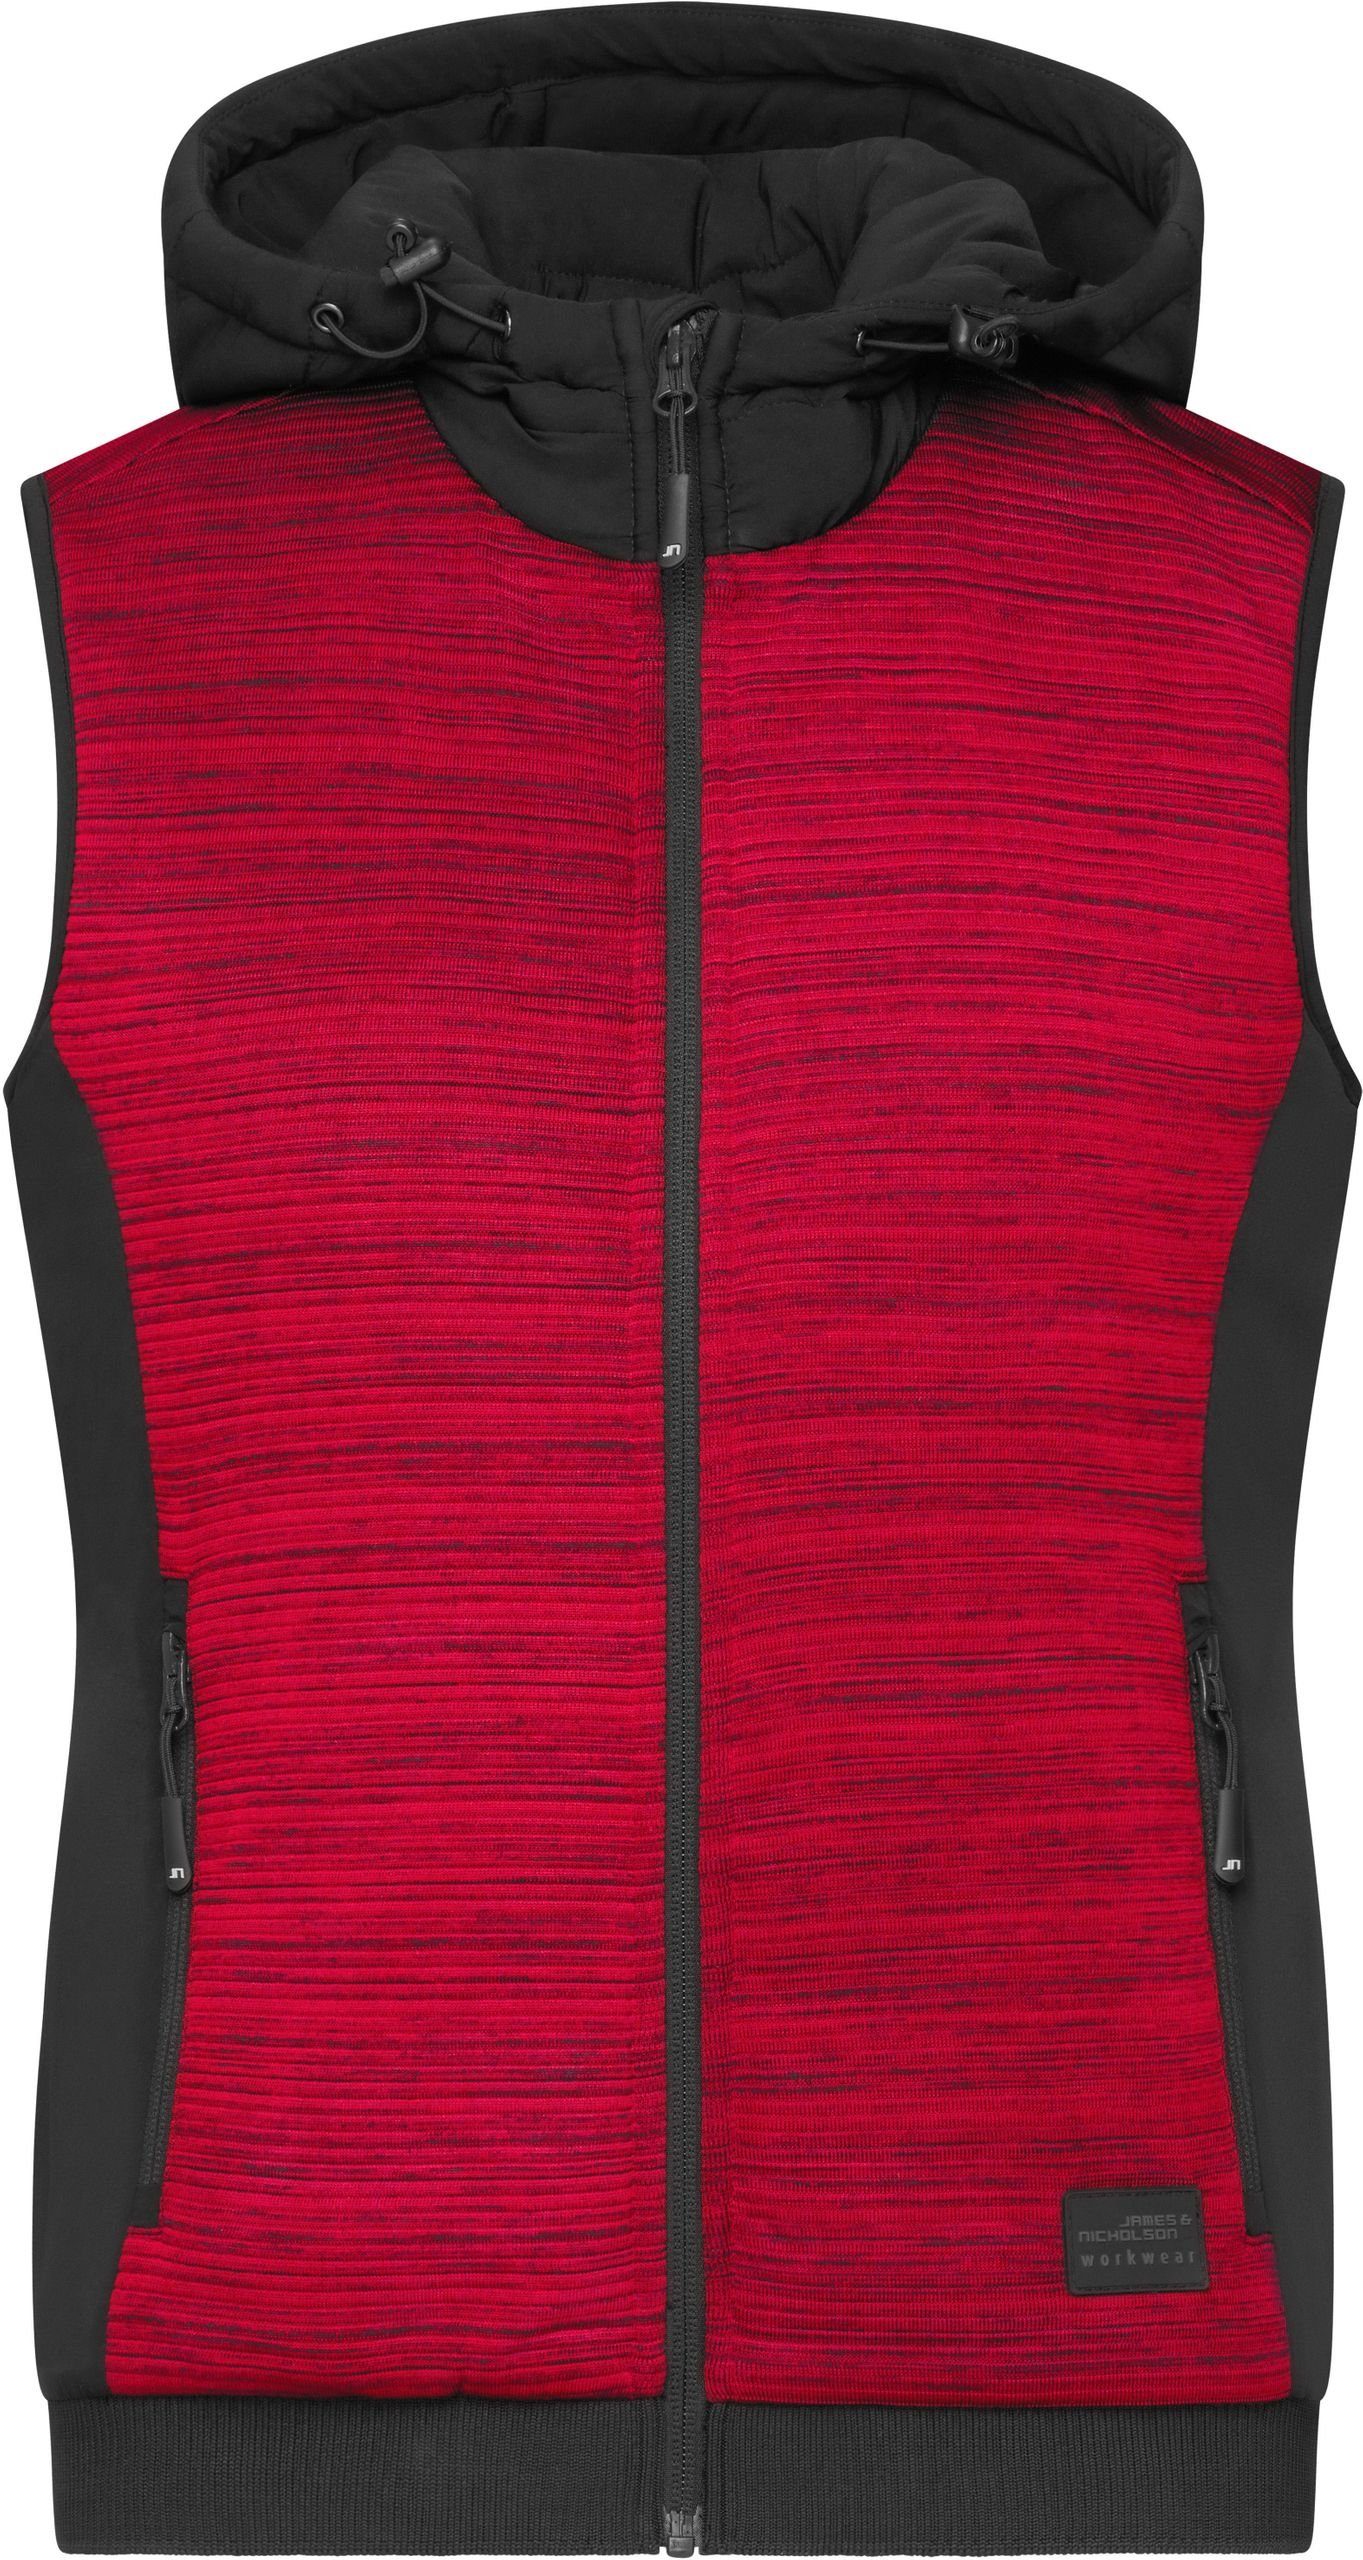 James & Nicholson Fleeceweste Damen melange/black Gilet Strickfleece red Hybrid